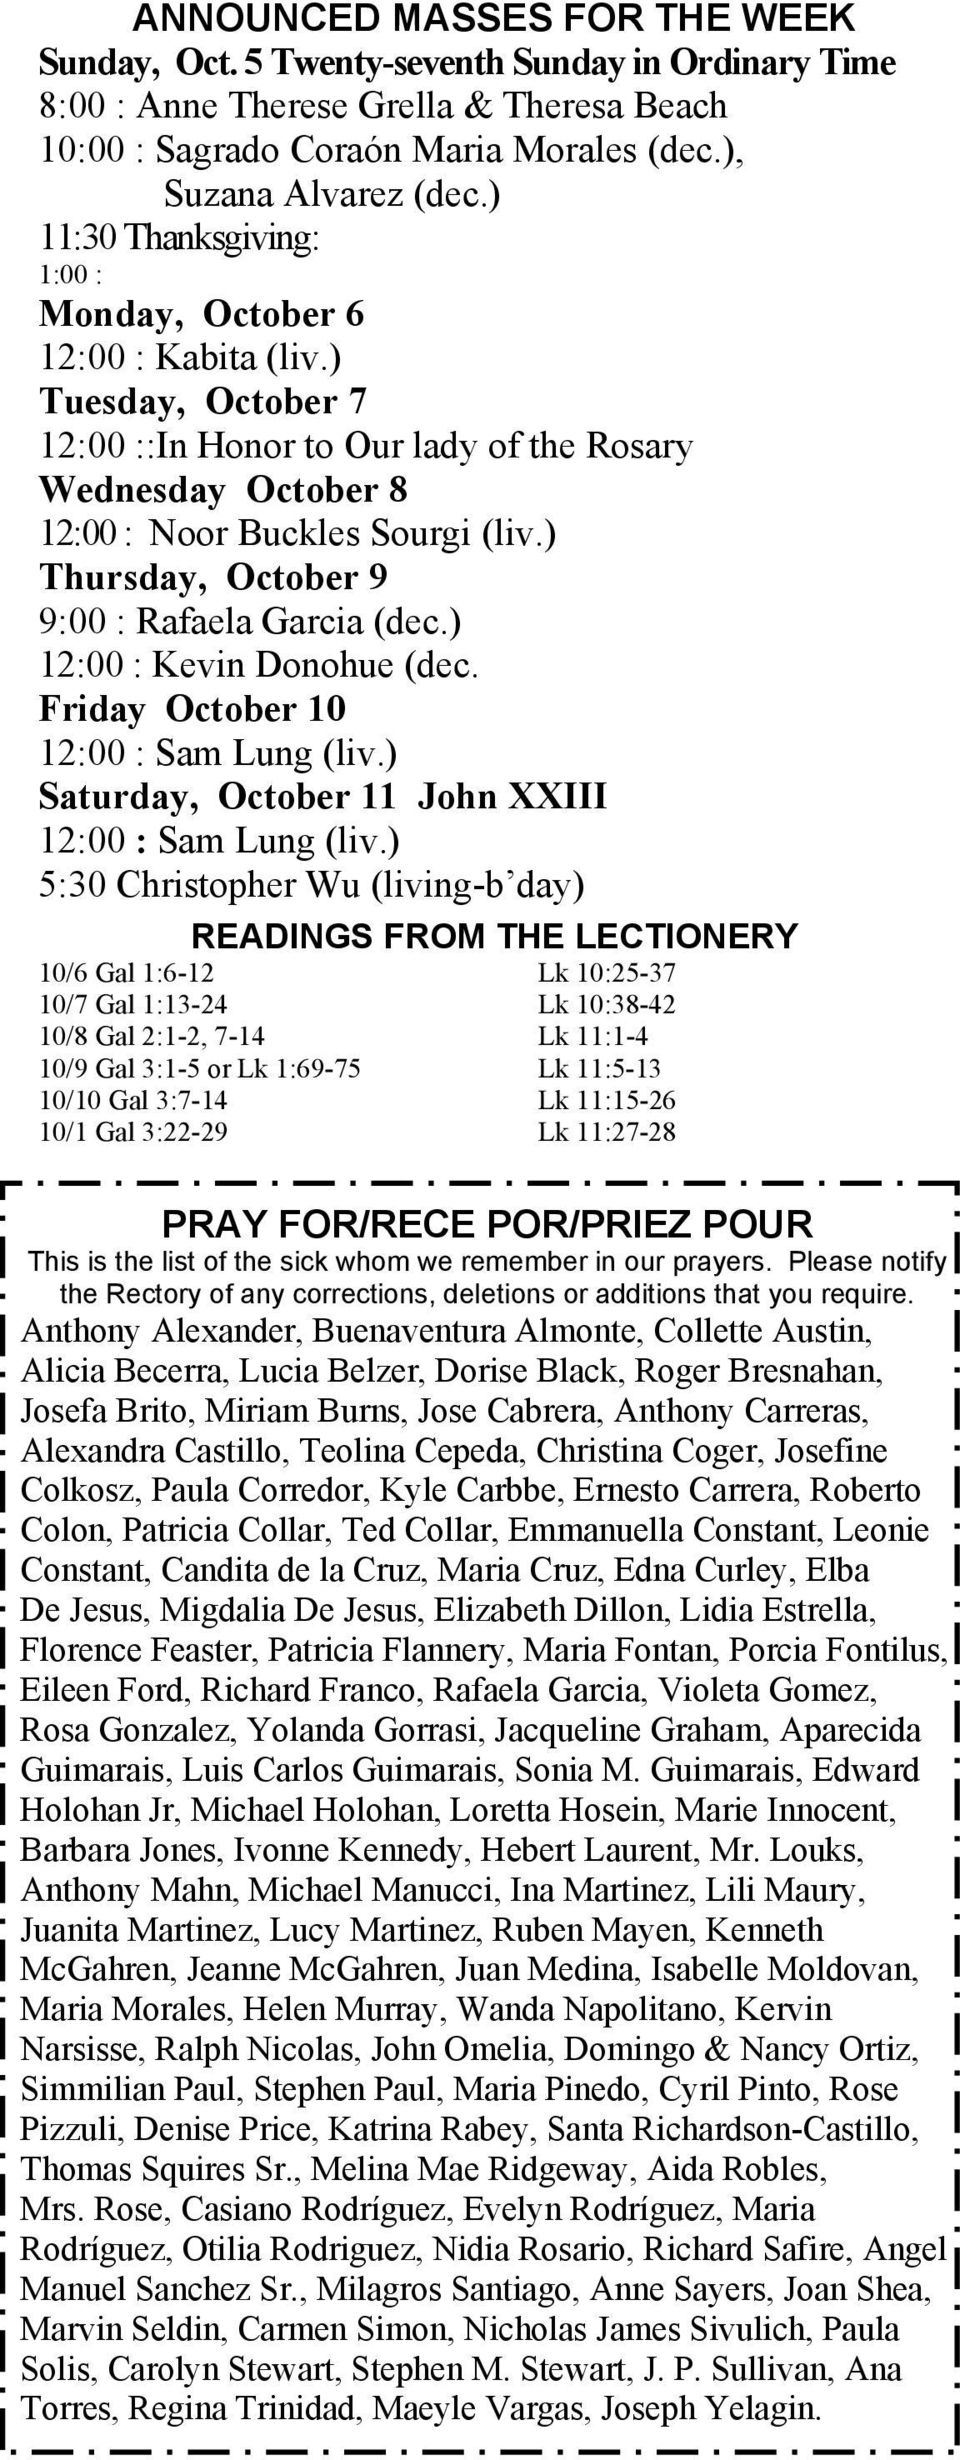 ) Thursday, October 9 9:00 : Rafaela Garcia (dec.) 12:00 : Kevin Donohue (dec. Friday October 10 12:00 : Sam Lung (liv.) Saturday, October 11 John XXIII 12:00 : Sam Lung (liv.